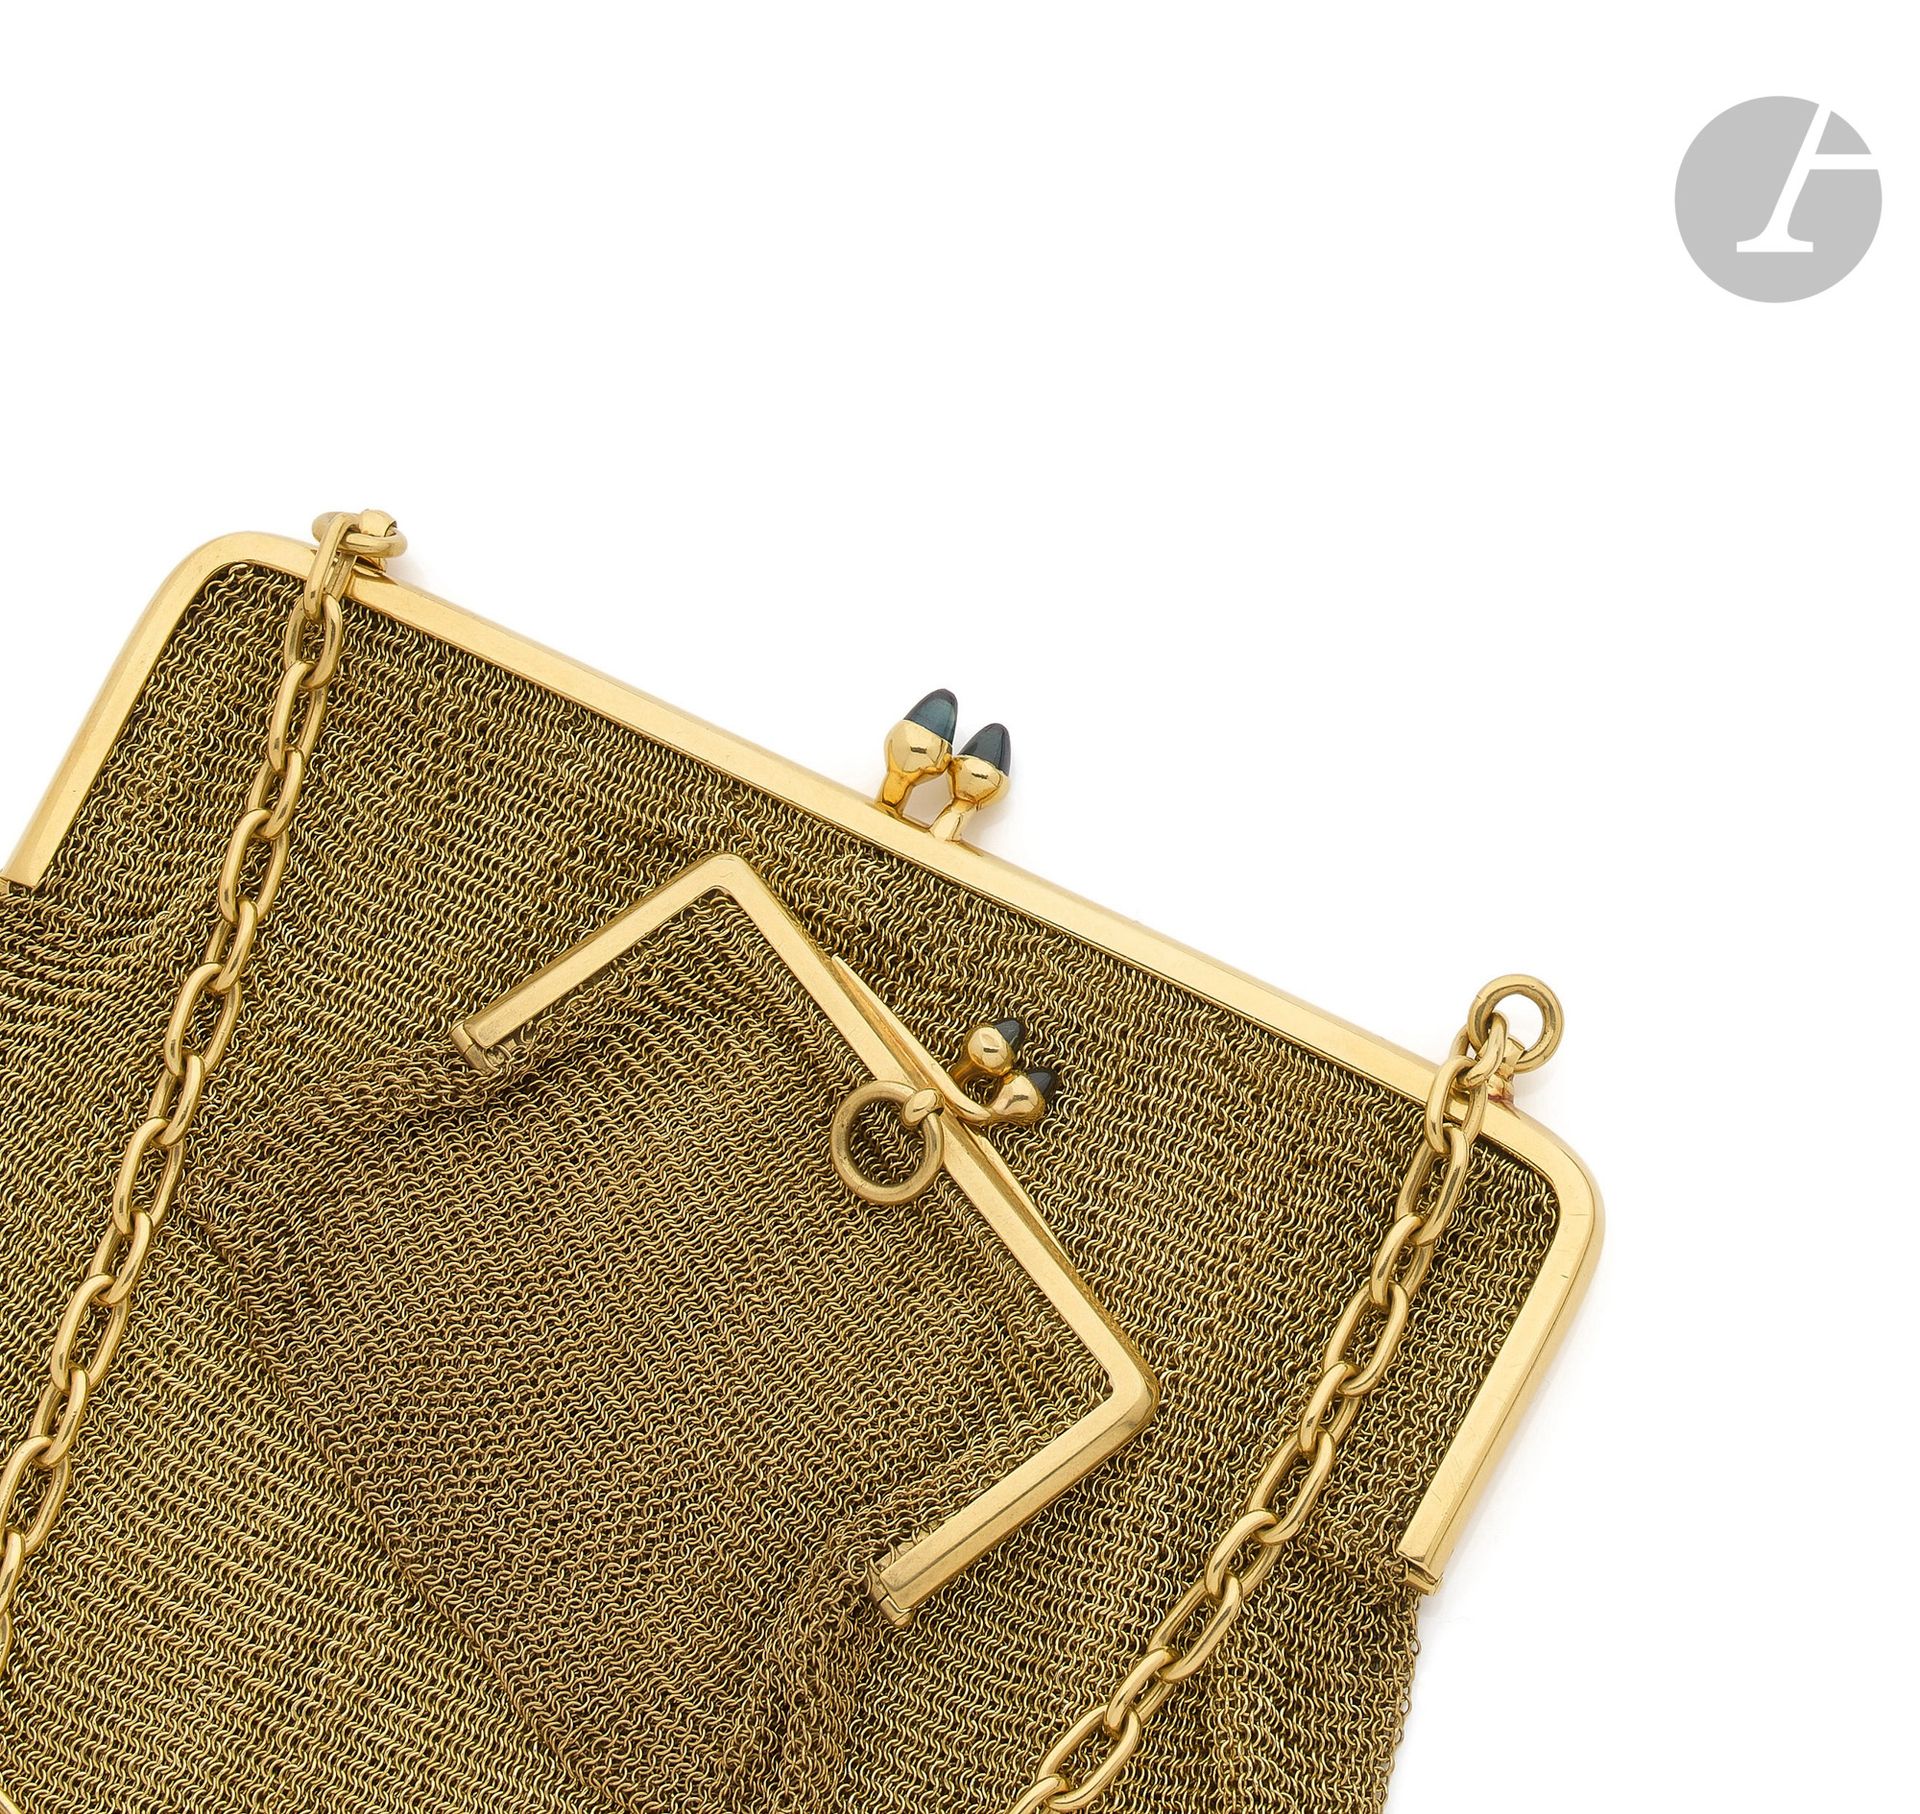 Null 18K（750）金链式晚装套装包括：一个带隔层的晚装包，包扣上装饰有凸圆形蓝宝石，一个配套的18K金钱包。20世纪初的法国作品。毛重：416.8克

&hellip;